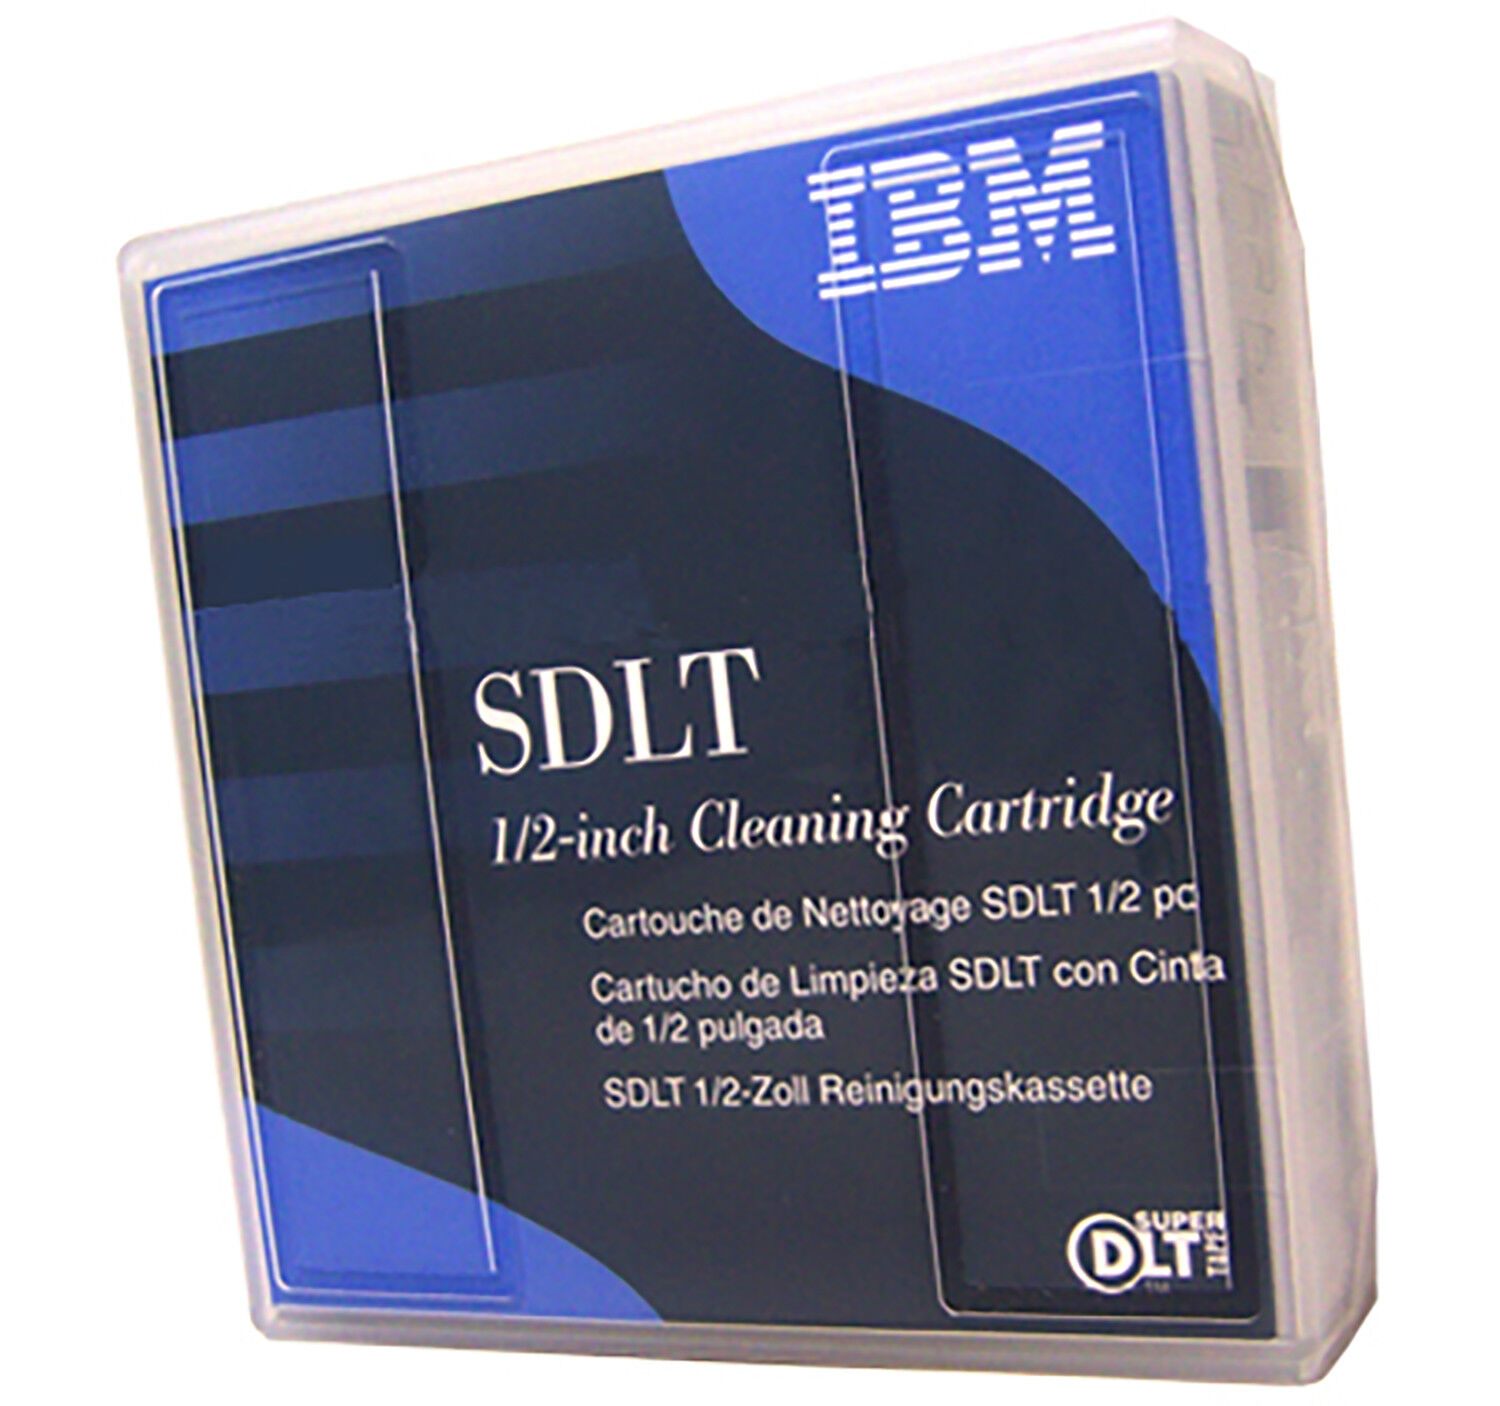 IBM DLT-SDLT 0.5in Cleaning Cartridge NEW 19P4357 1/2-inch Super  Single Pack